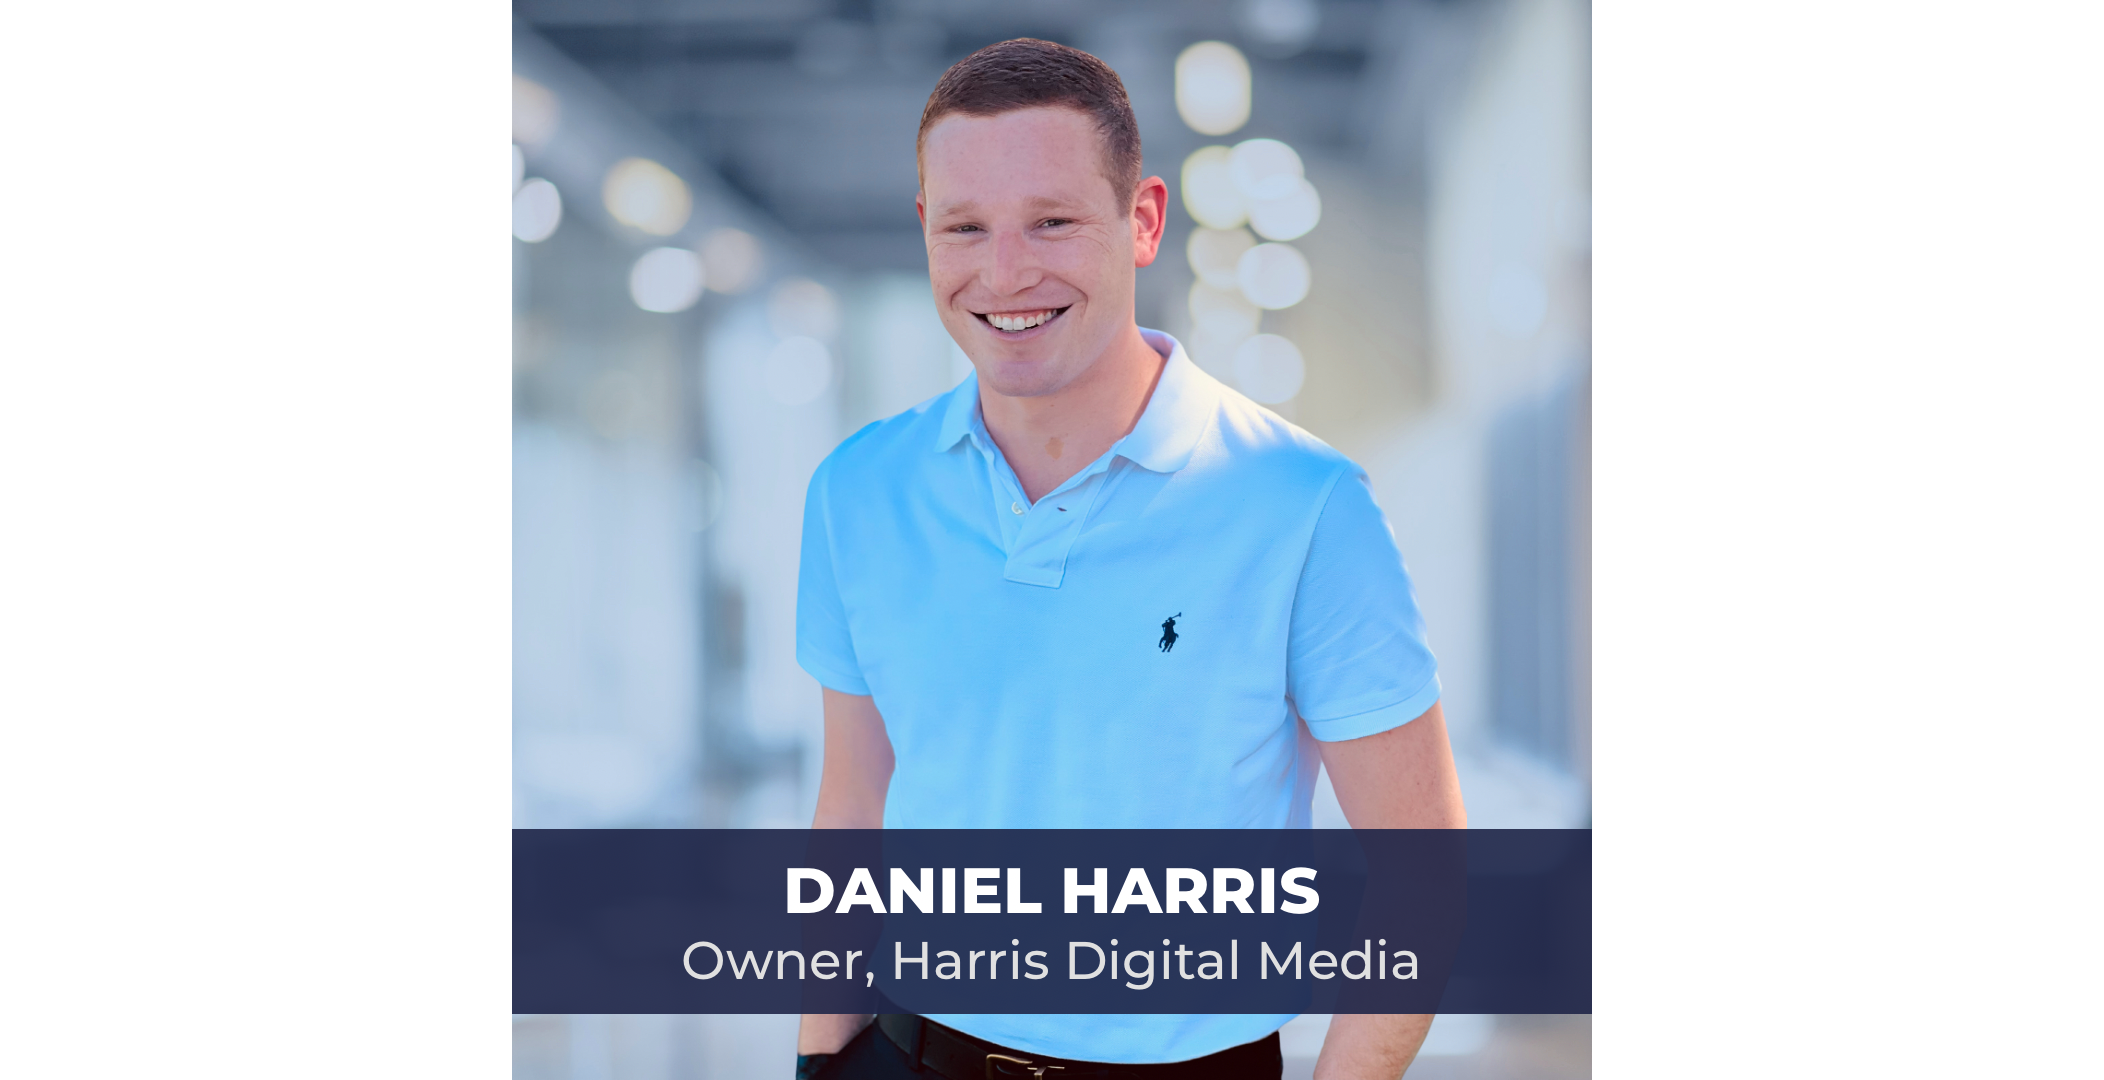 Media & Marketing for the Future - Harris Digital Media